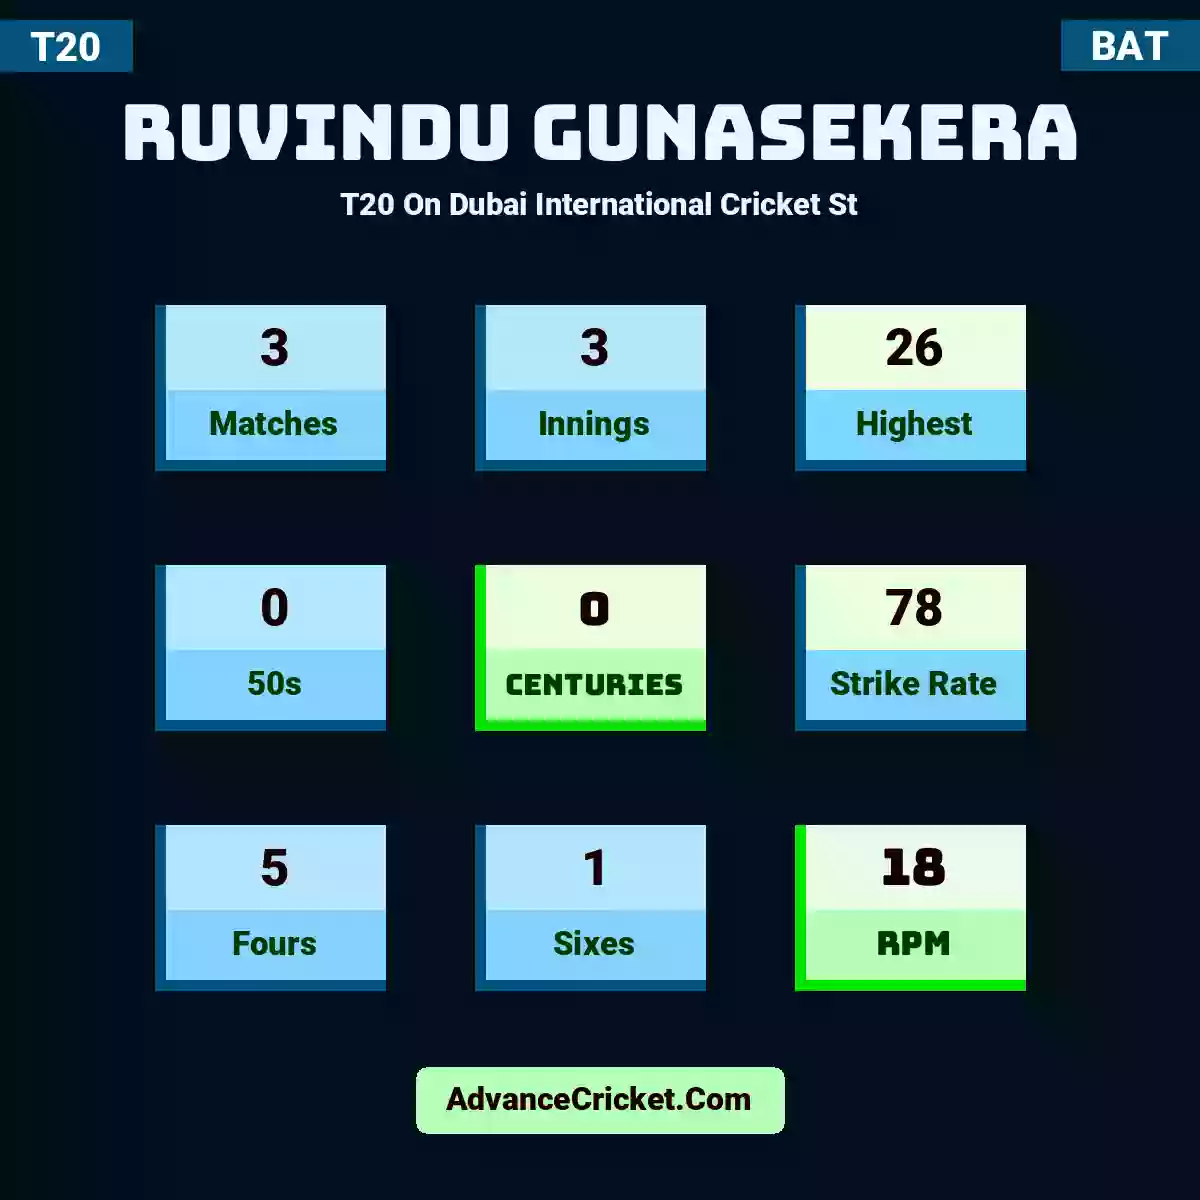 Ruvindu Gunasekera T20  On Dubai International Cricket St, Ruvindu Gunasekera played 3 matches, scored 26 runs as highest, 0 half-centuries, and 0 centuries, with a strike rate of 78. R.Gunasekera hit 5 fours and 1 sixes, with an RPM of 18.